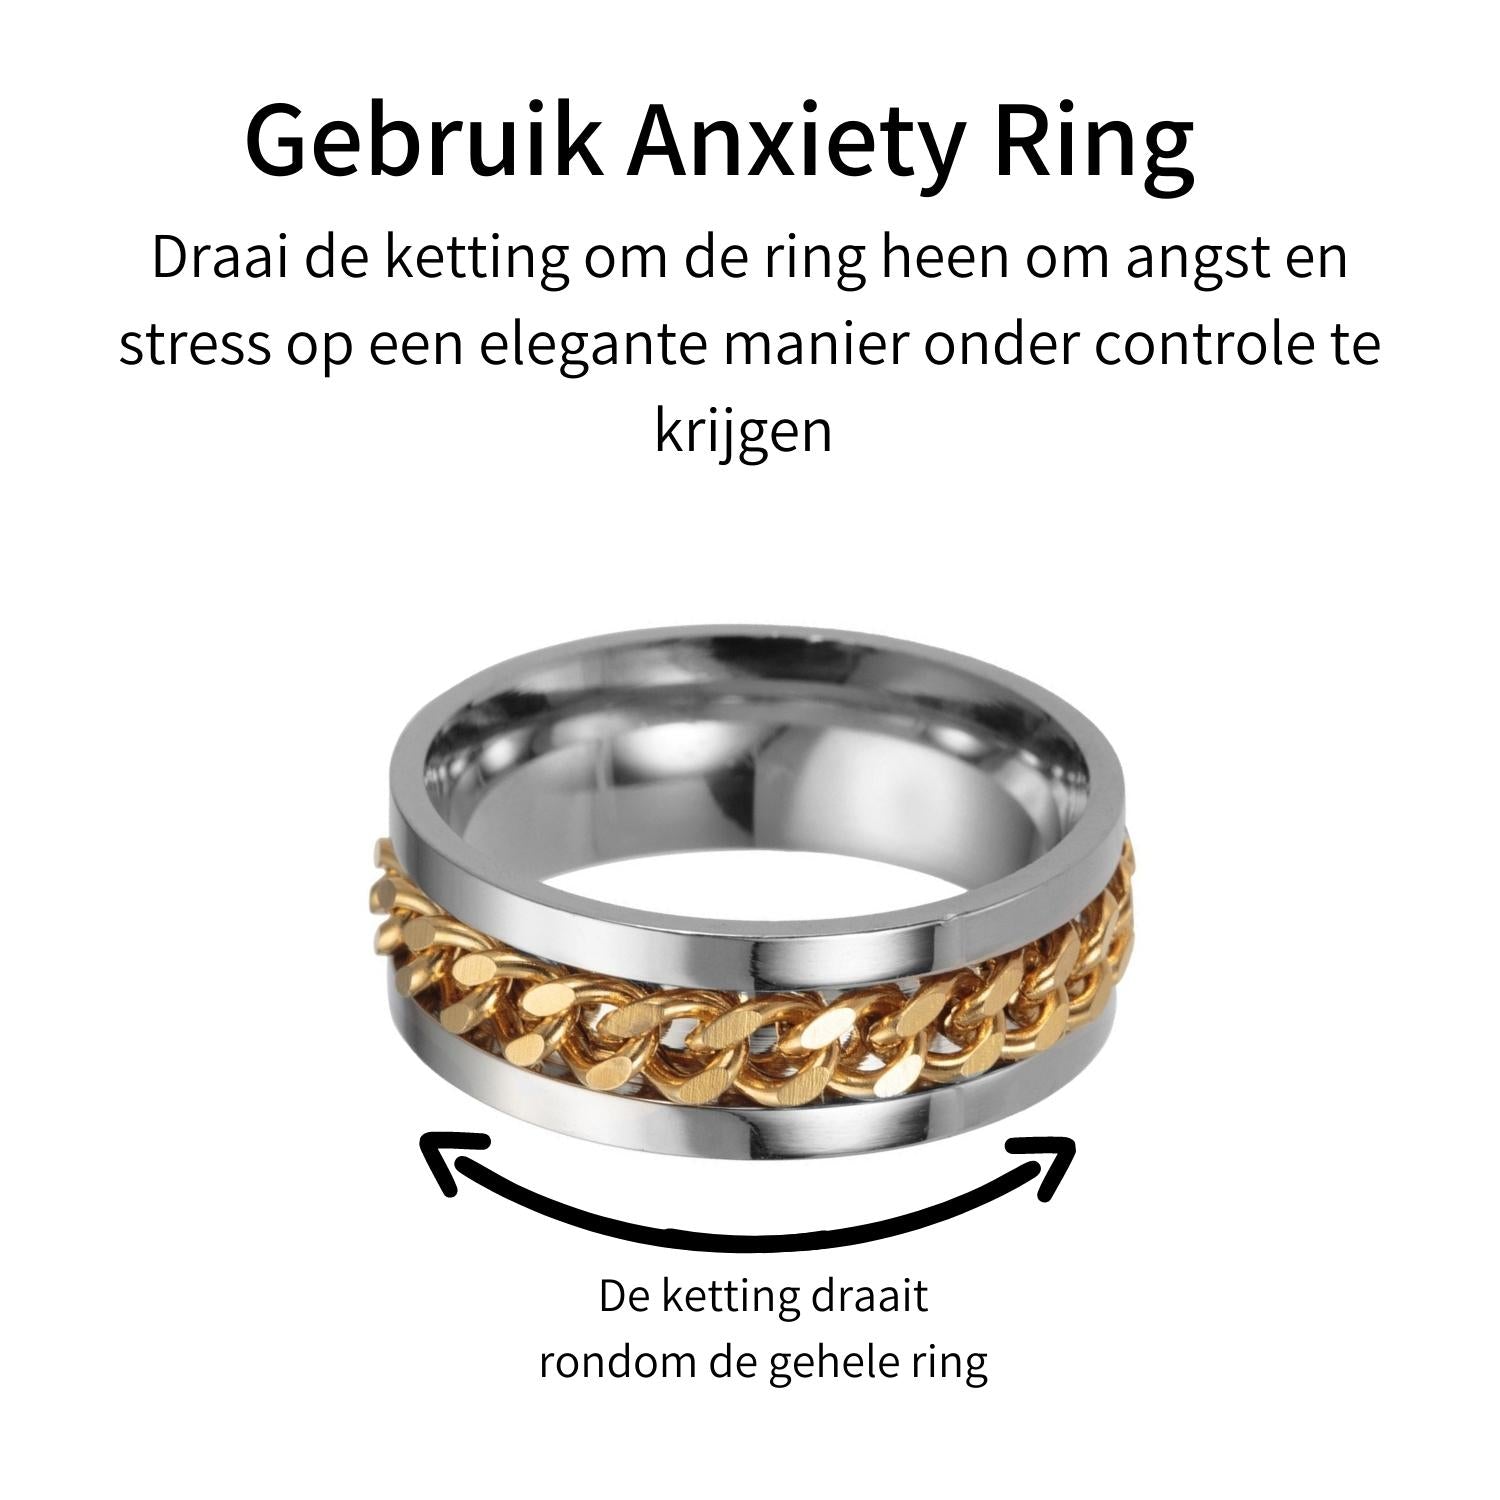 Anxiety Ring (Kettinkje) Gouden ketting Gebruik